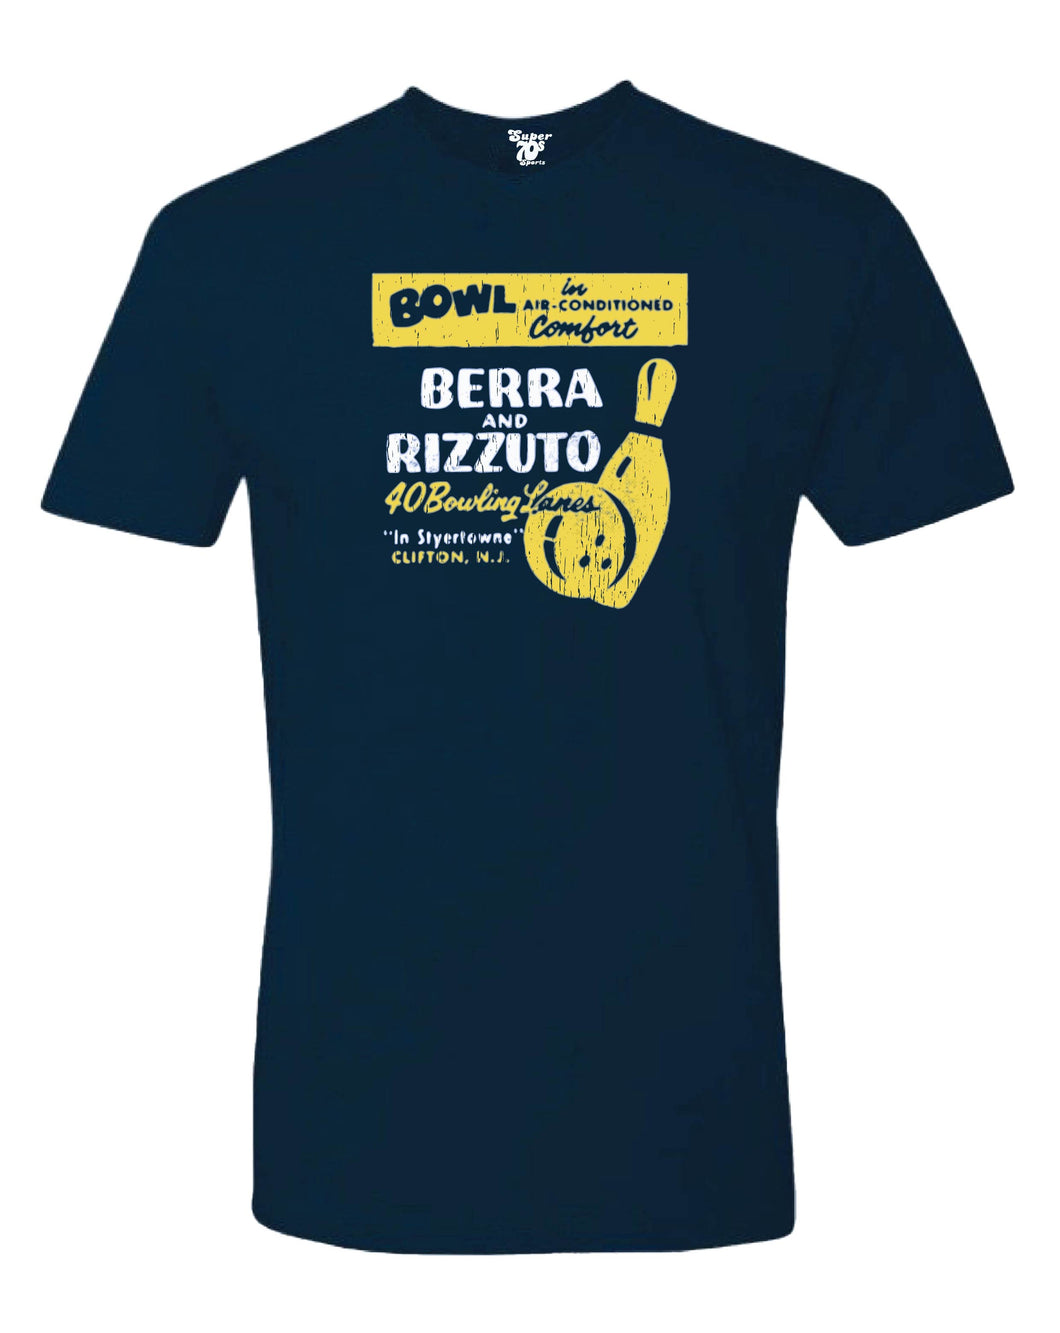 Berra and Rizzuto Tee